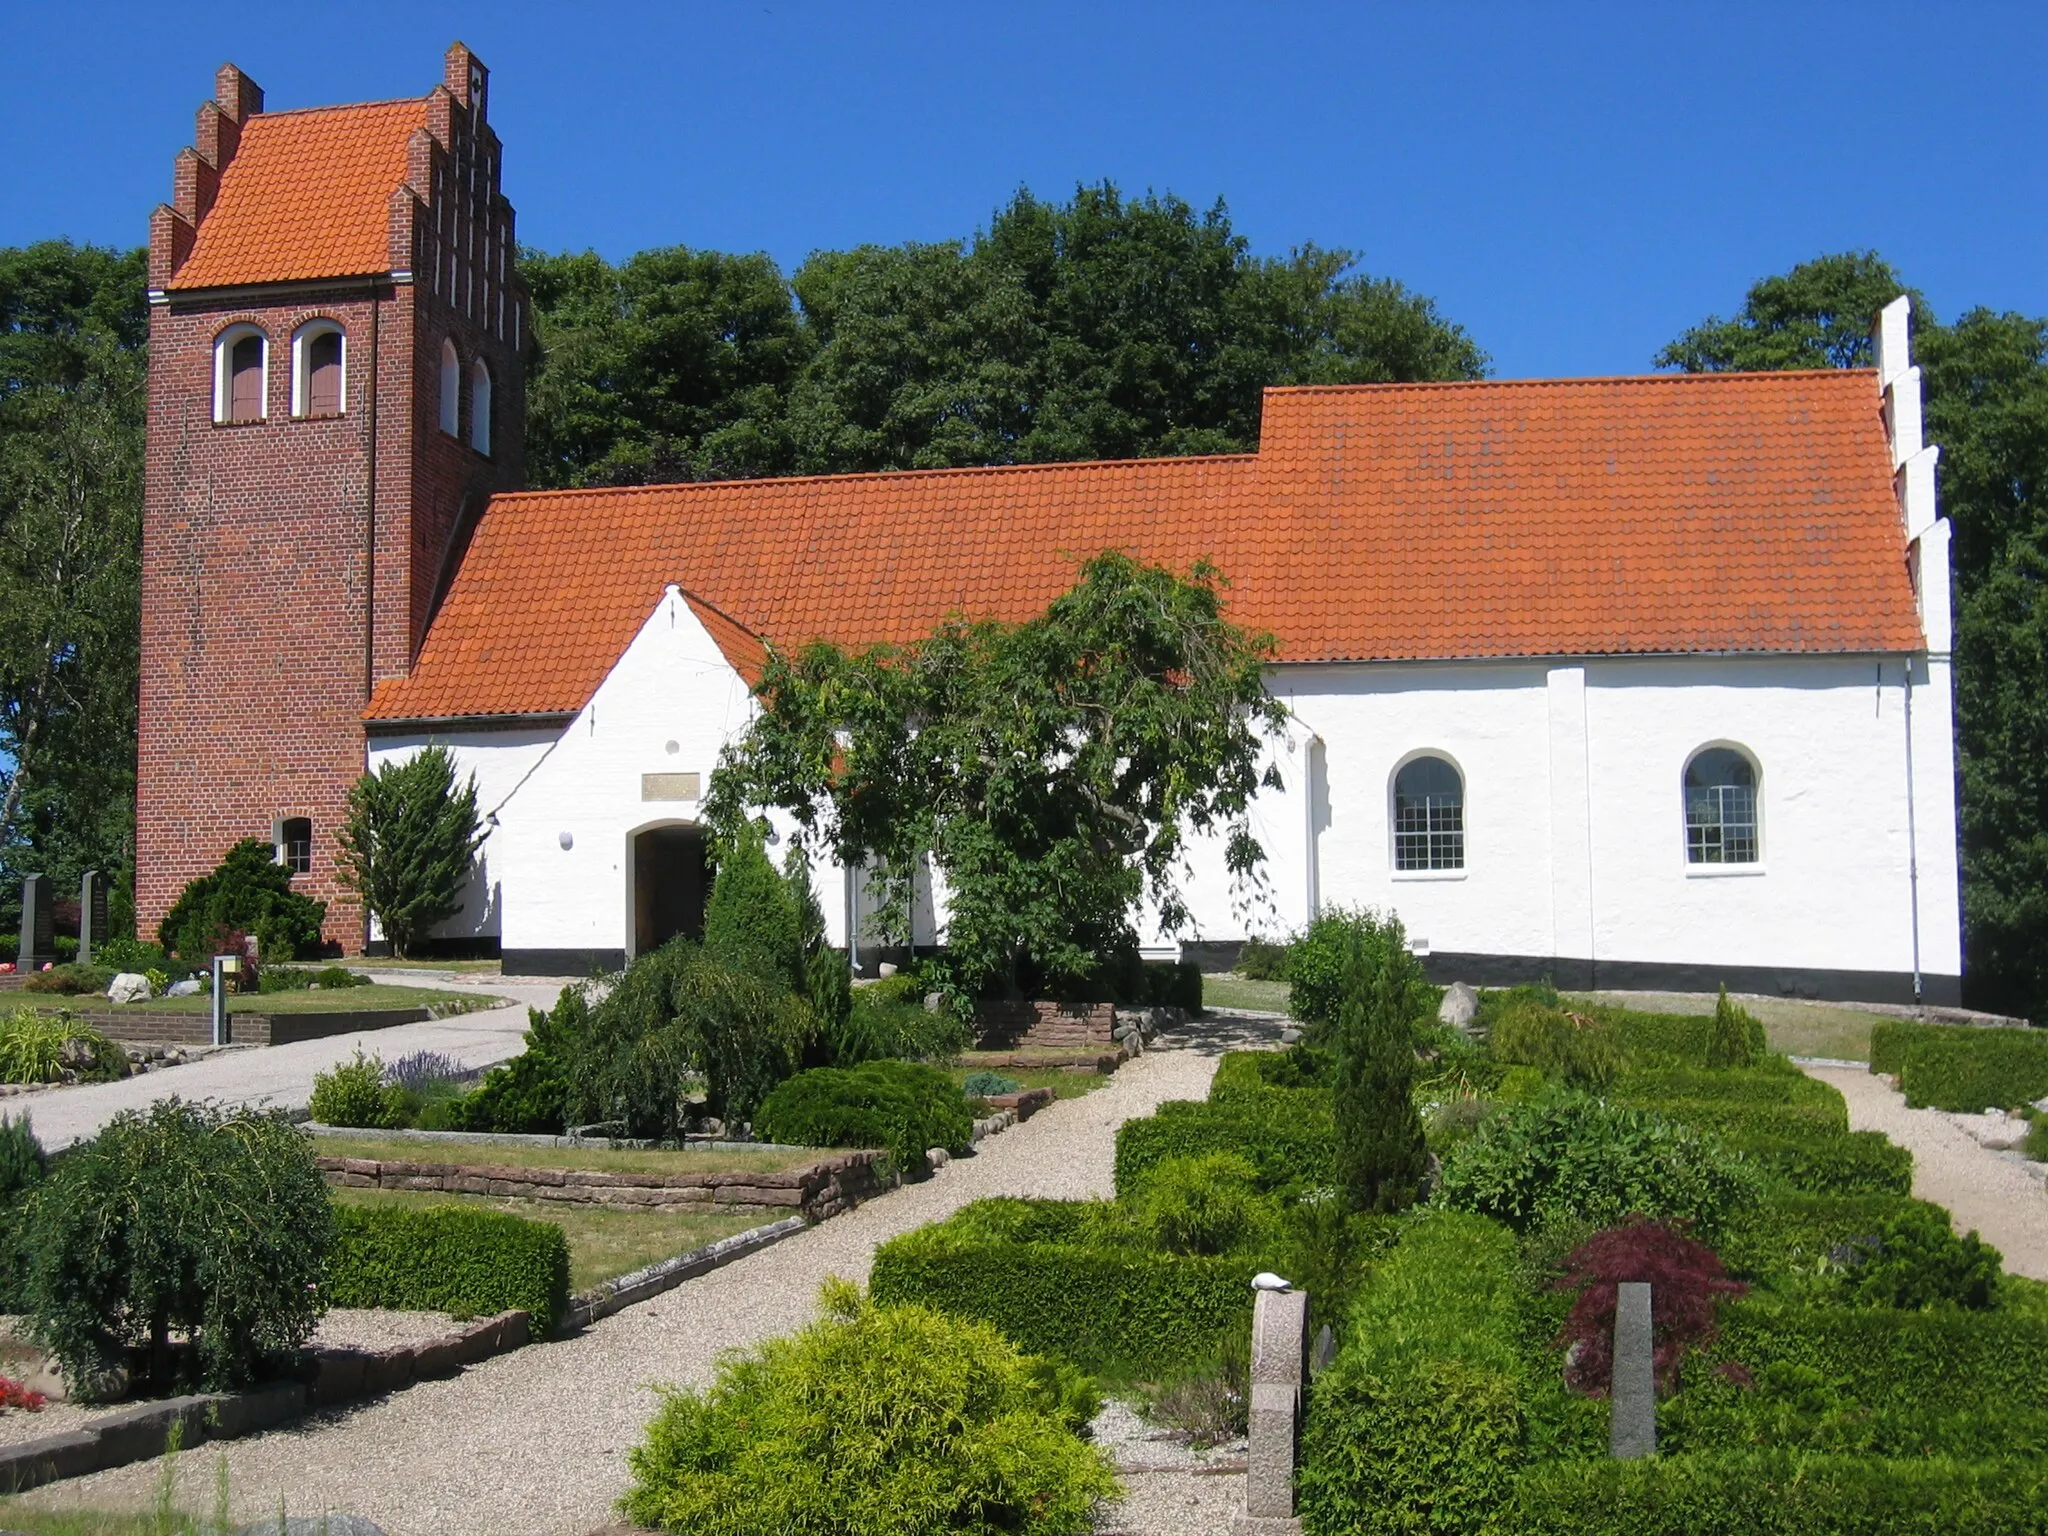 Photo showing: Tibirke Church, Tibirke parish, Holbo Herred, Frederiksborg County, Denmark.